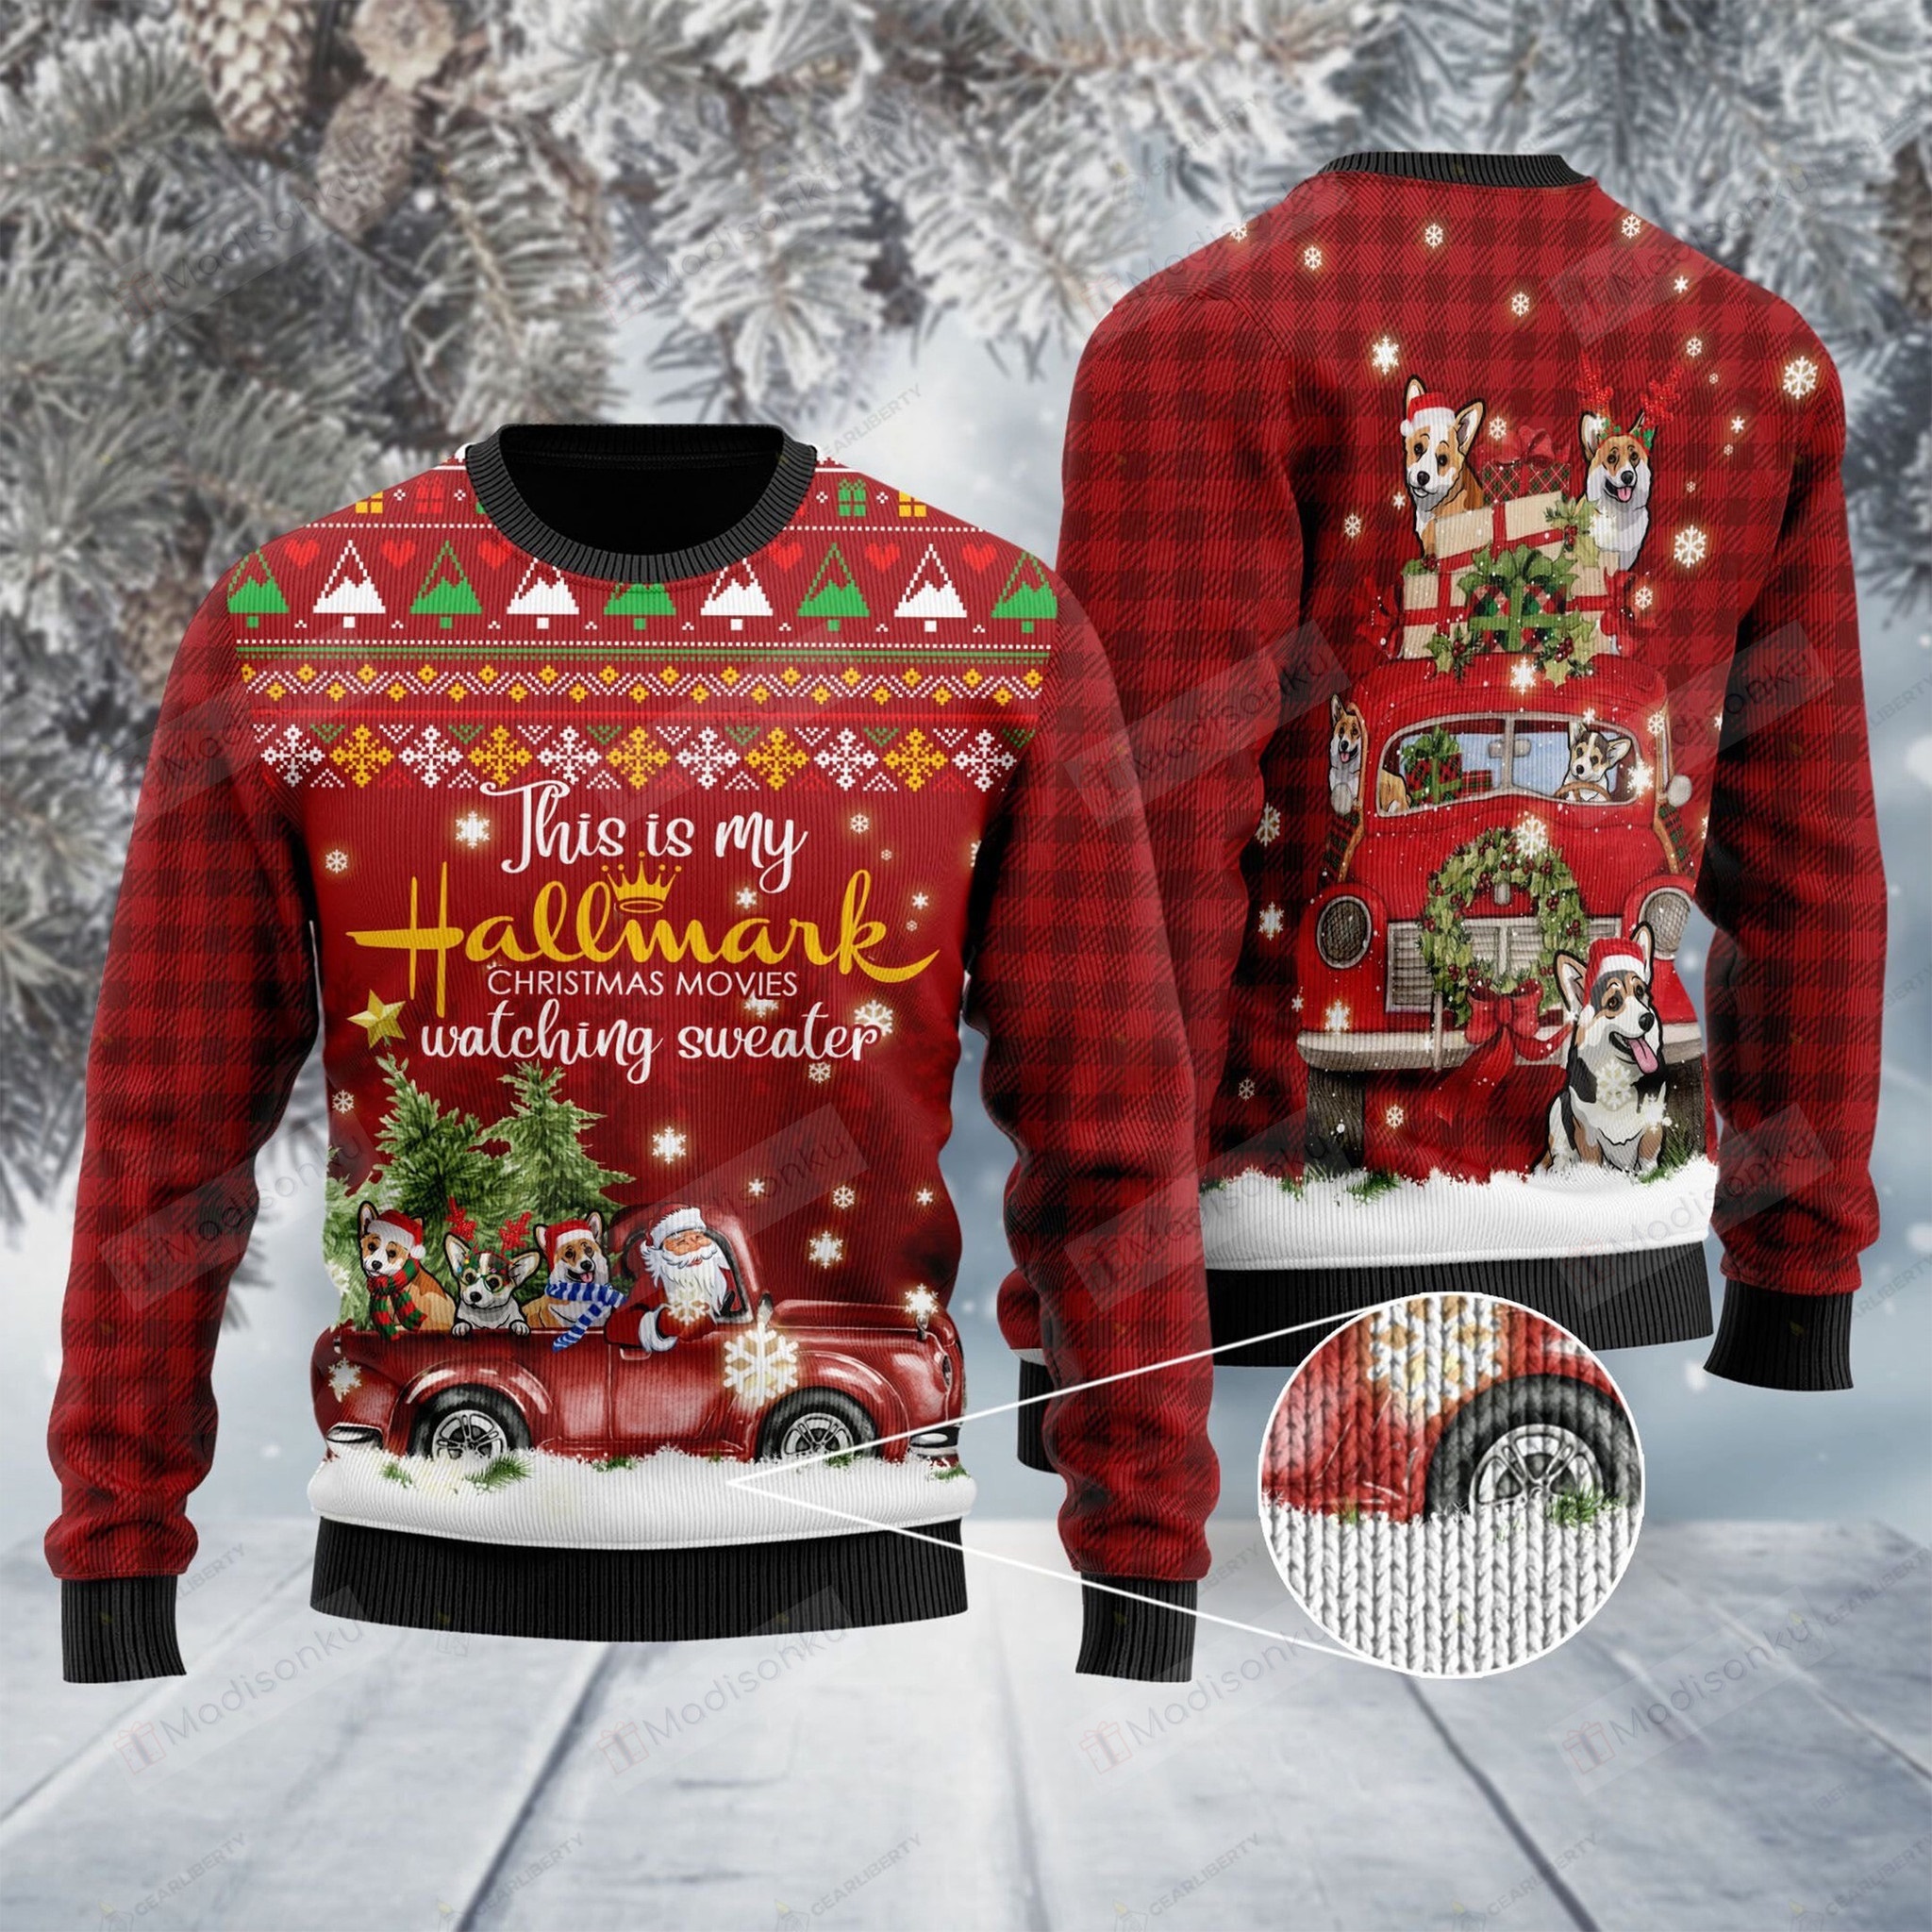 [ Amazing ] Corgi and Santa Claus this is my hallmark ugly christmas sweater – Saleoff 301121